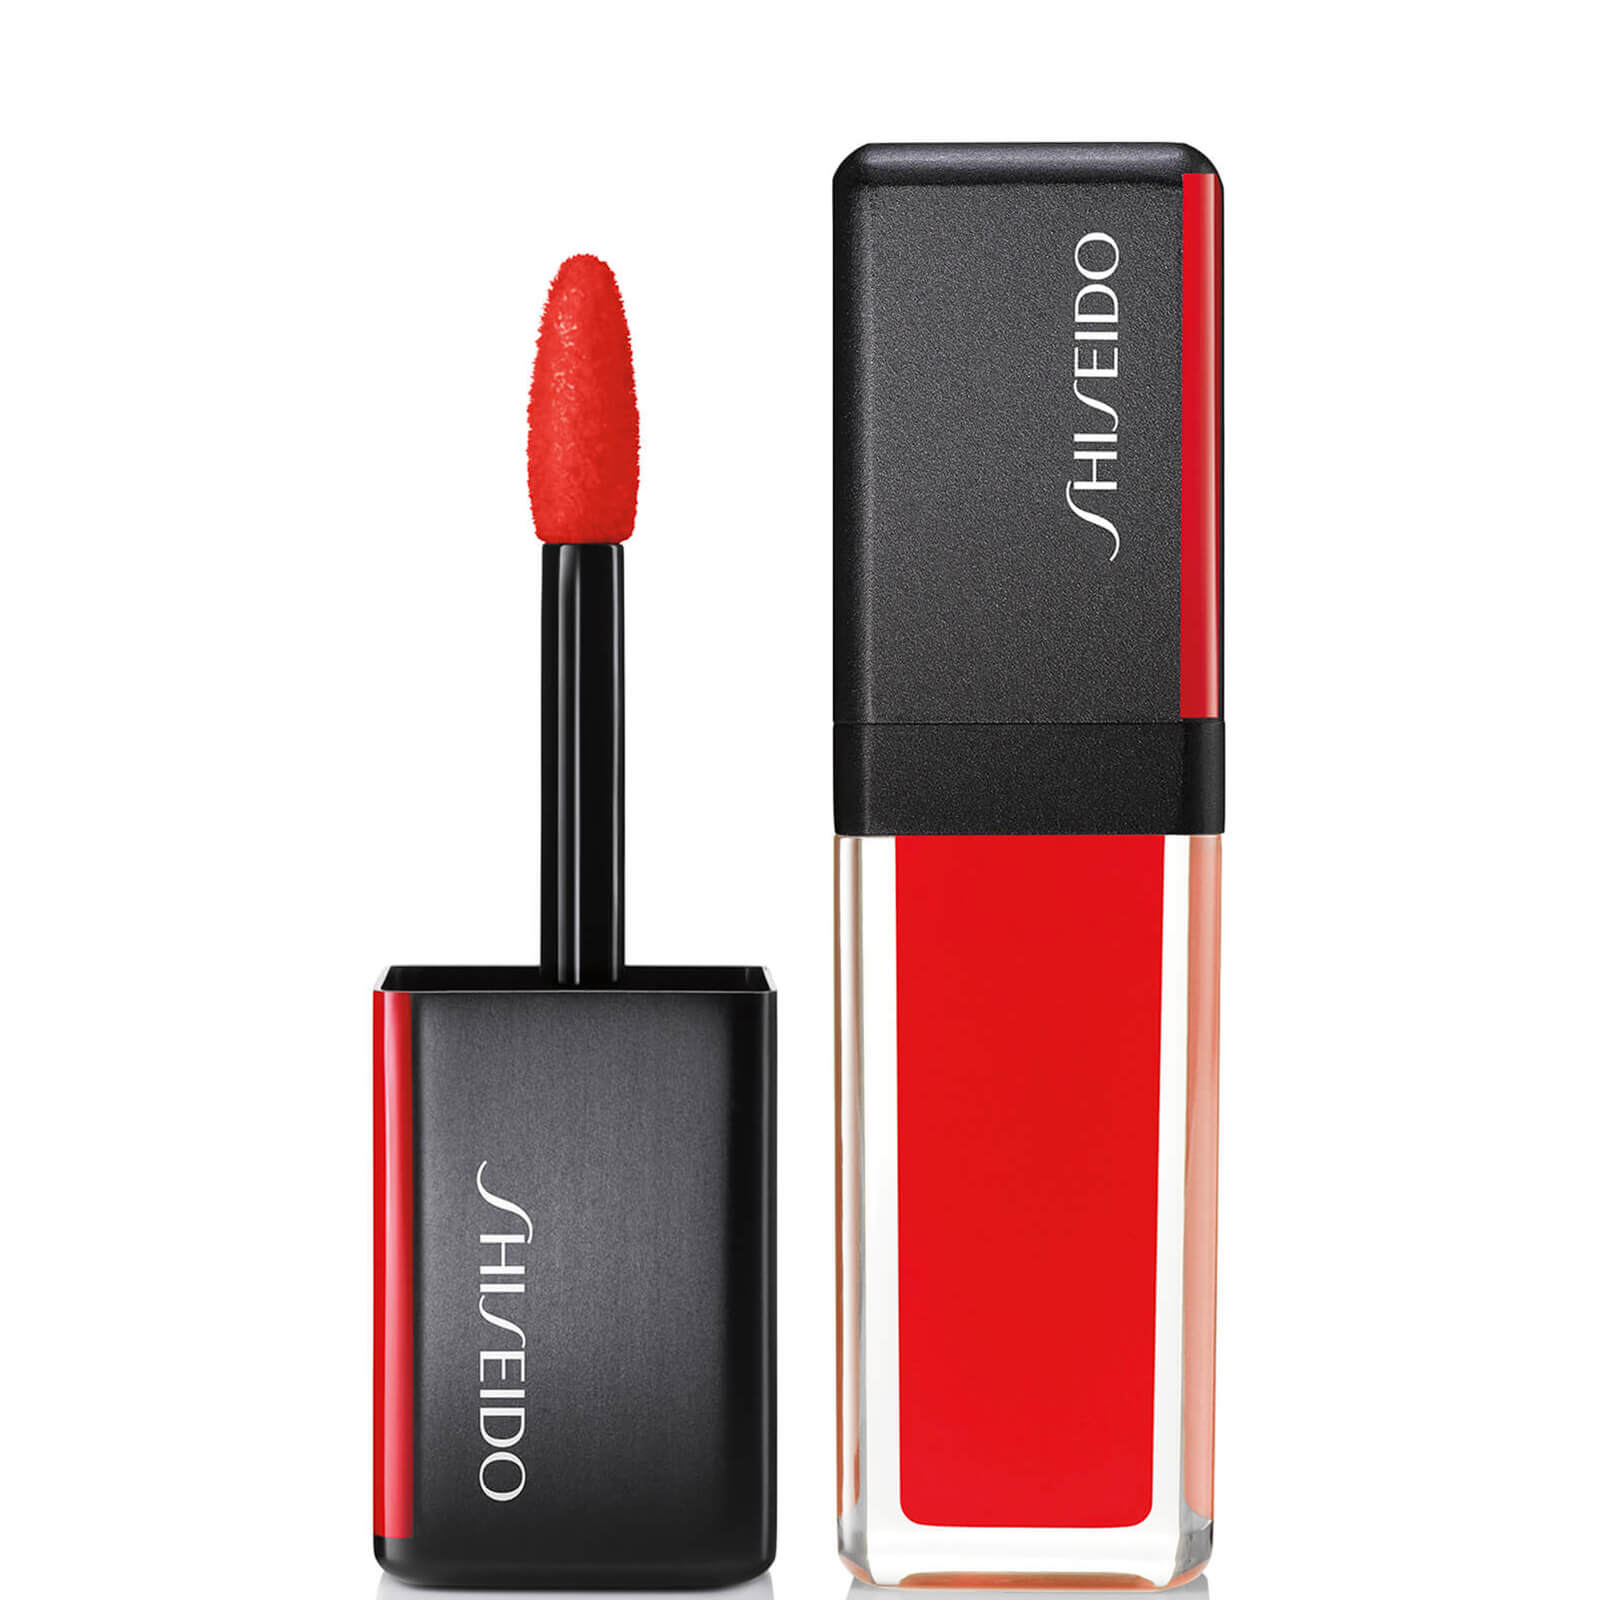 Shiseido LacquerInk gloss labbra (varie tonalità) - Red Flicker 305